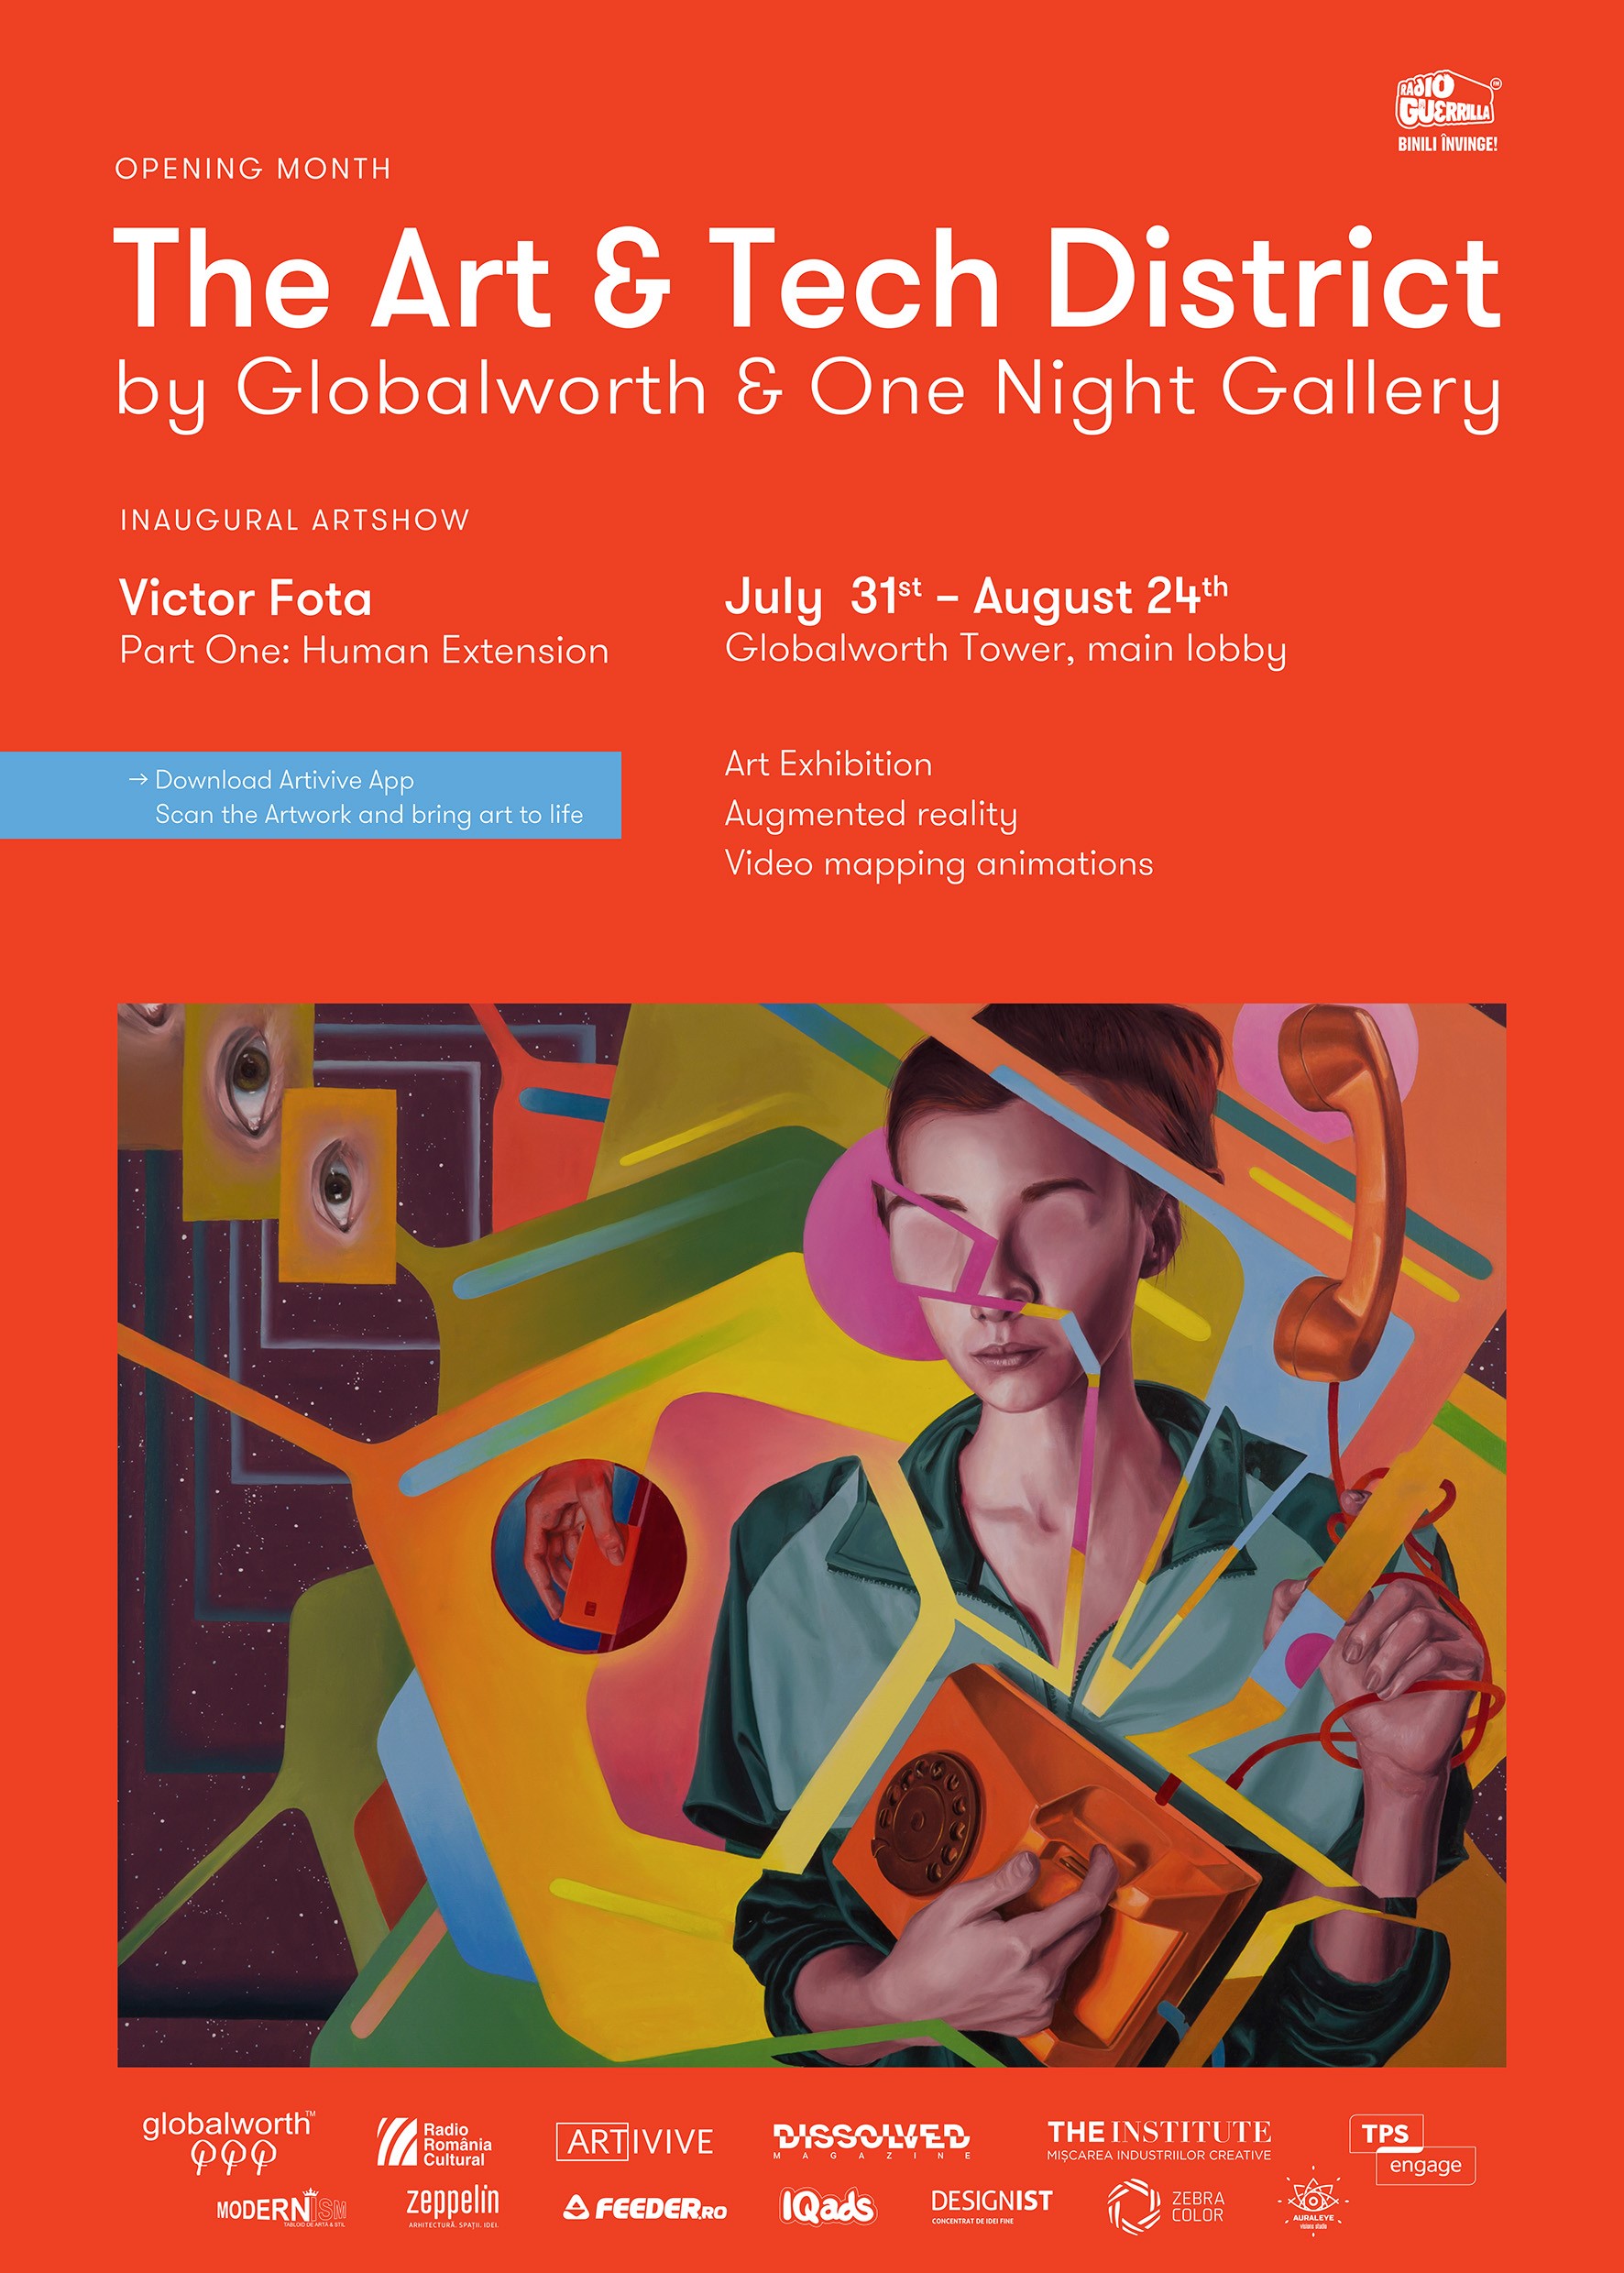 Victor Fota @Art & Tech District by Globalworth